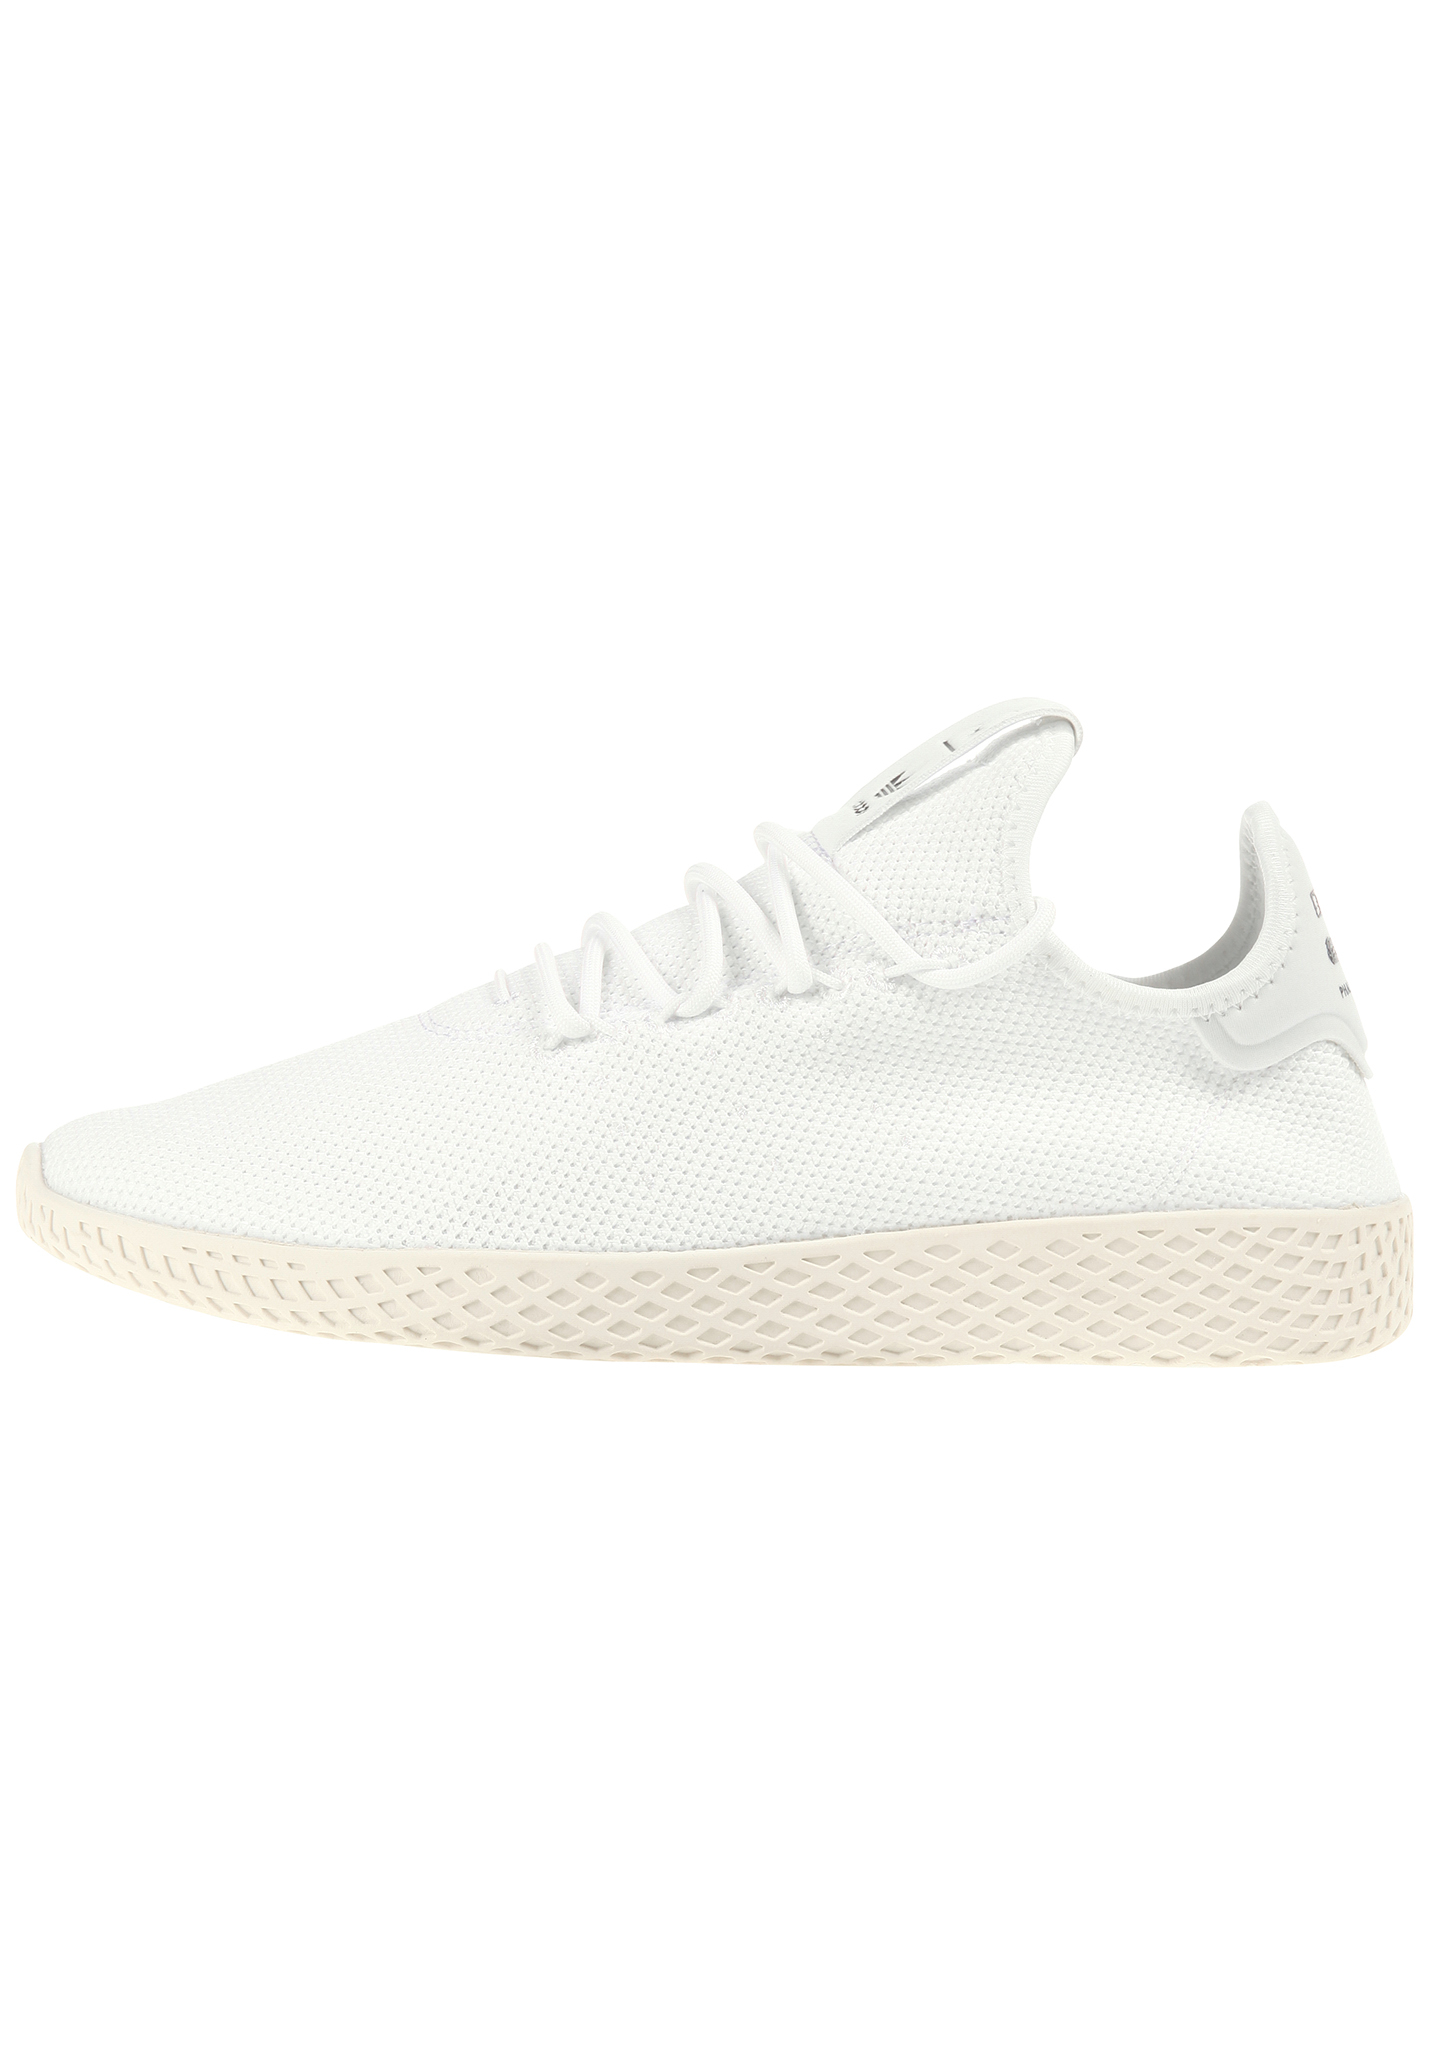 Adidas Originals Pharrell Williams Tennis HU Sneaker white 47 1/3